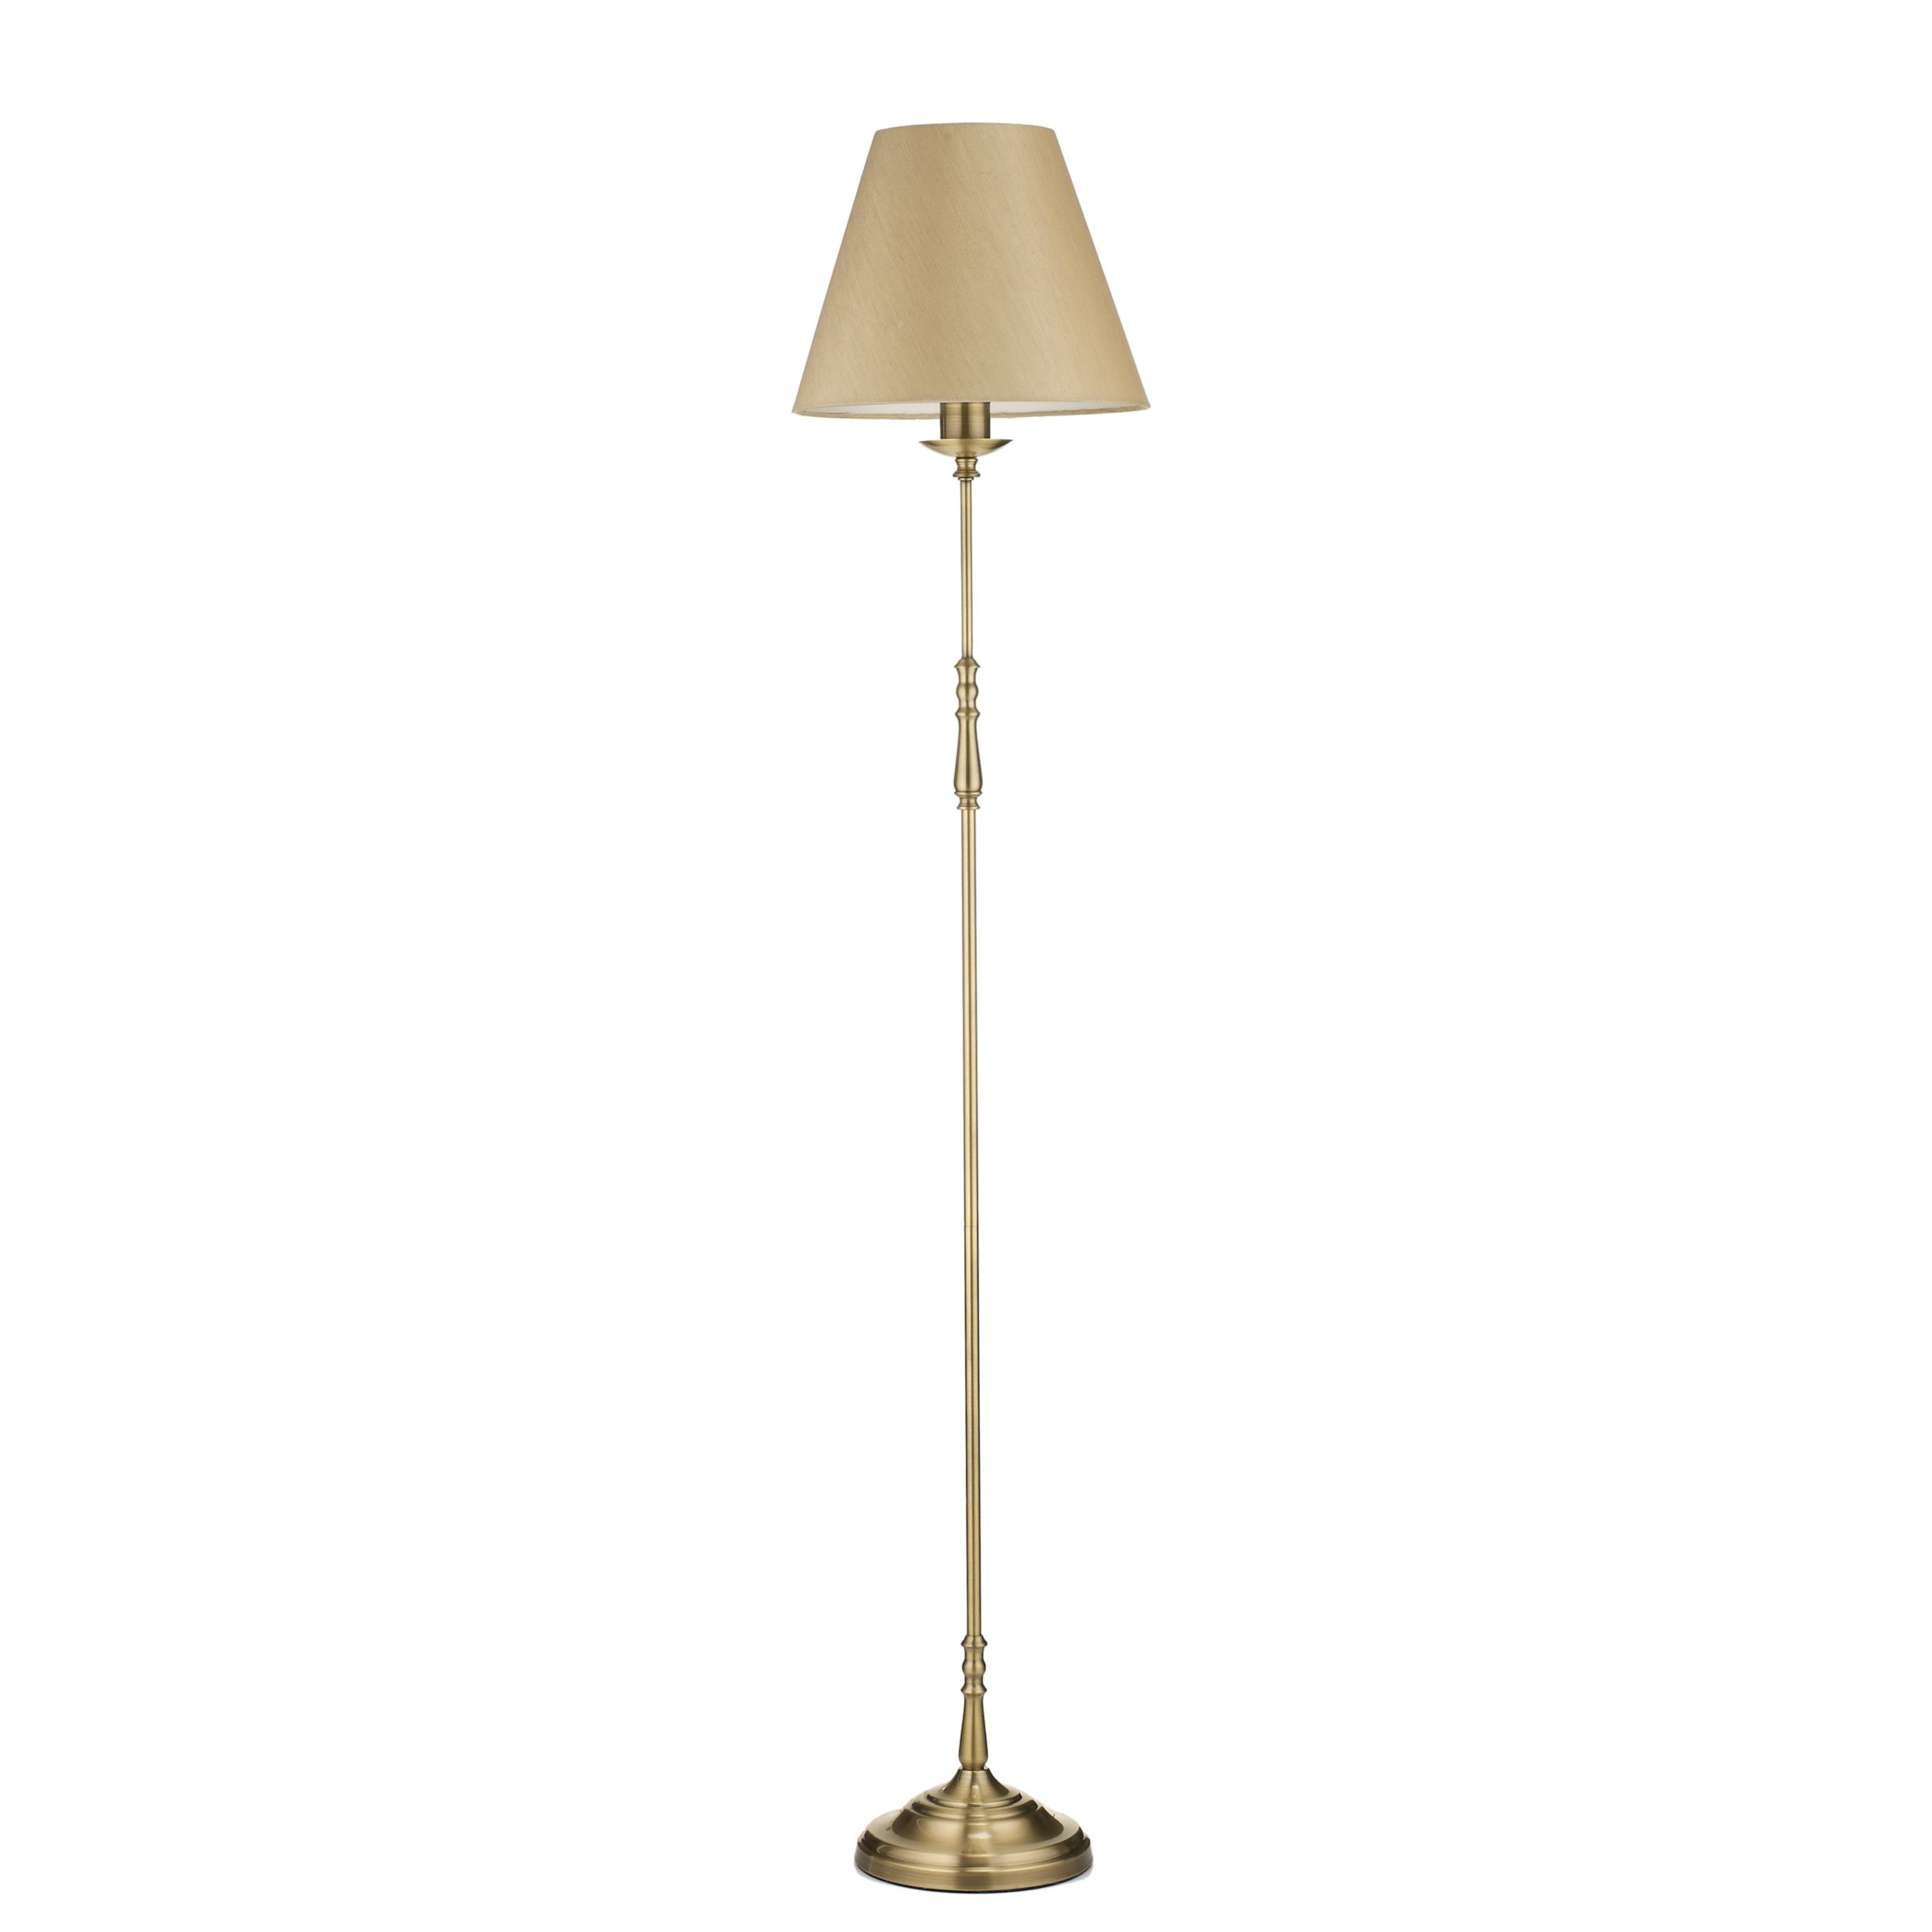 John Lewis Sloane Floor Lamp, Antique Brass